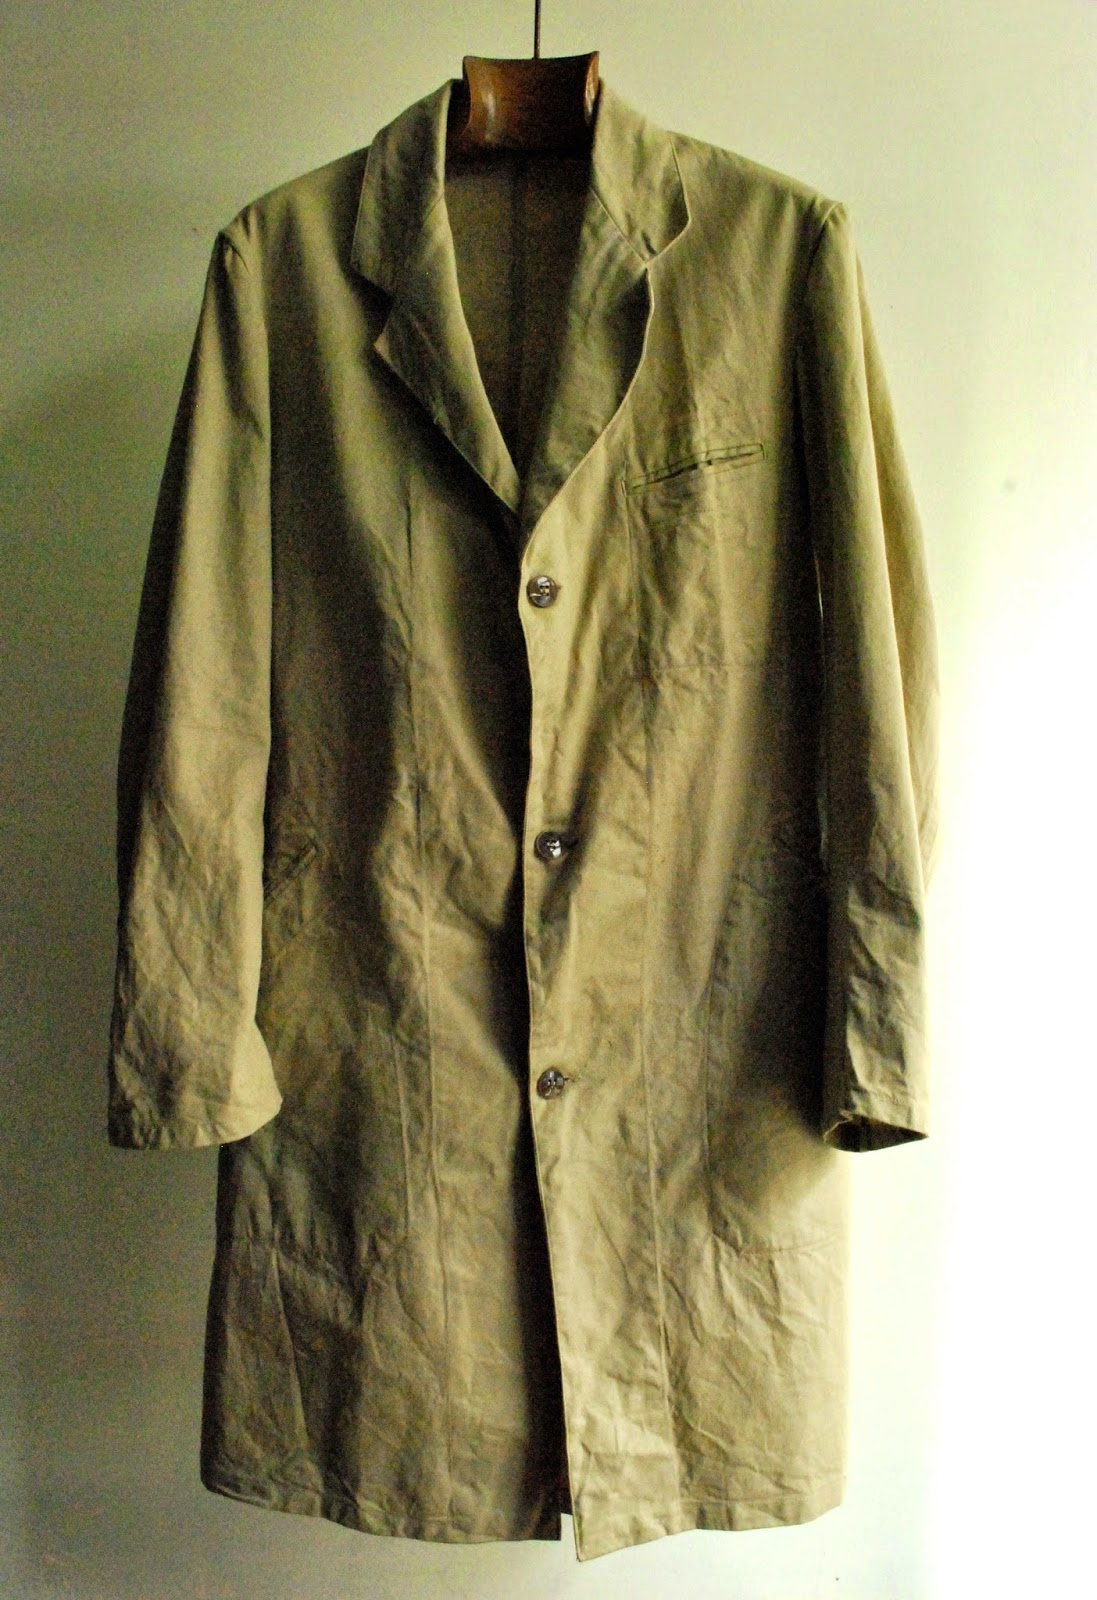 encore: 1950s french work coat 